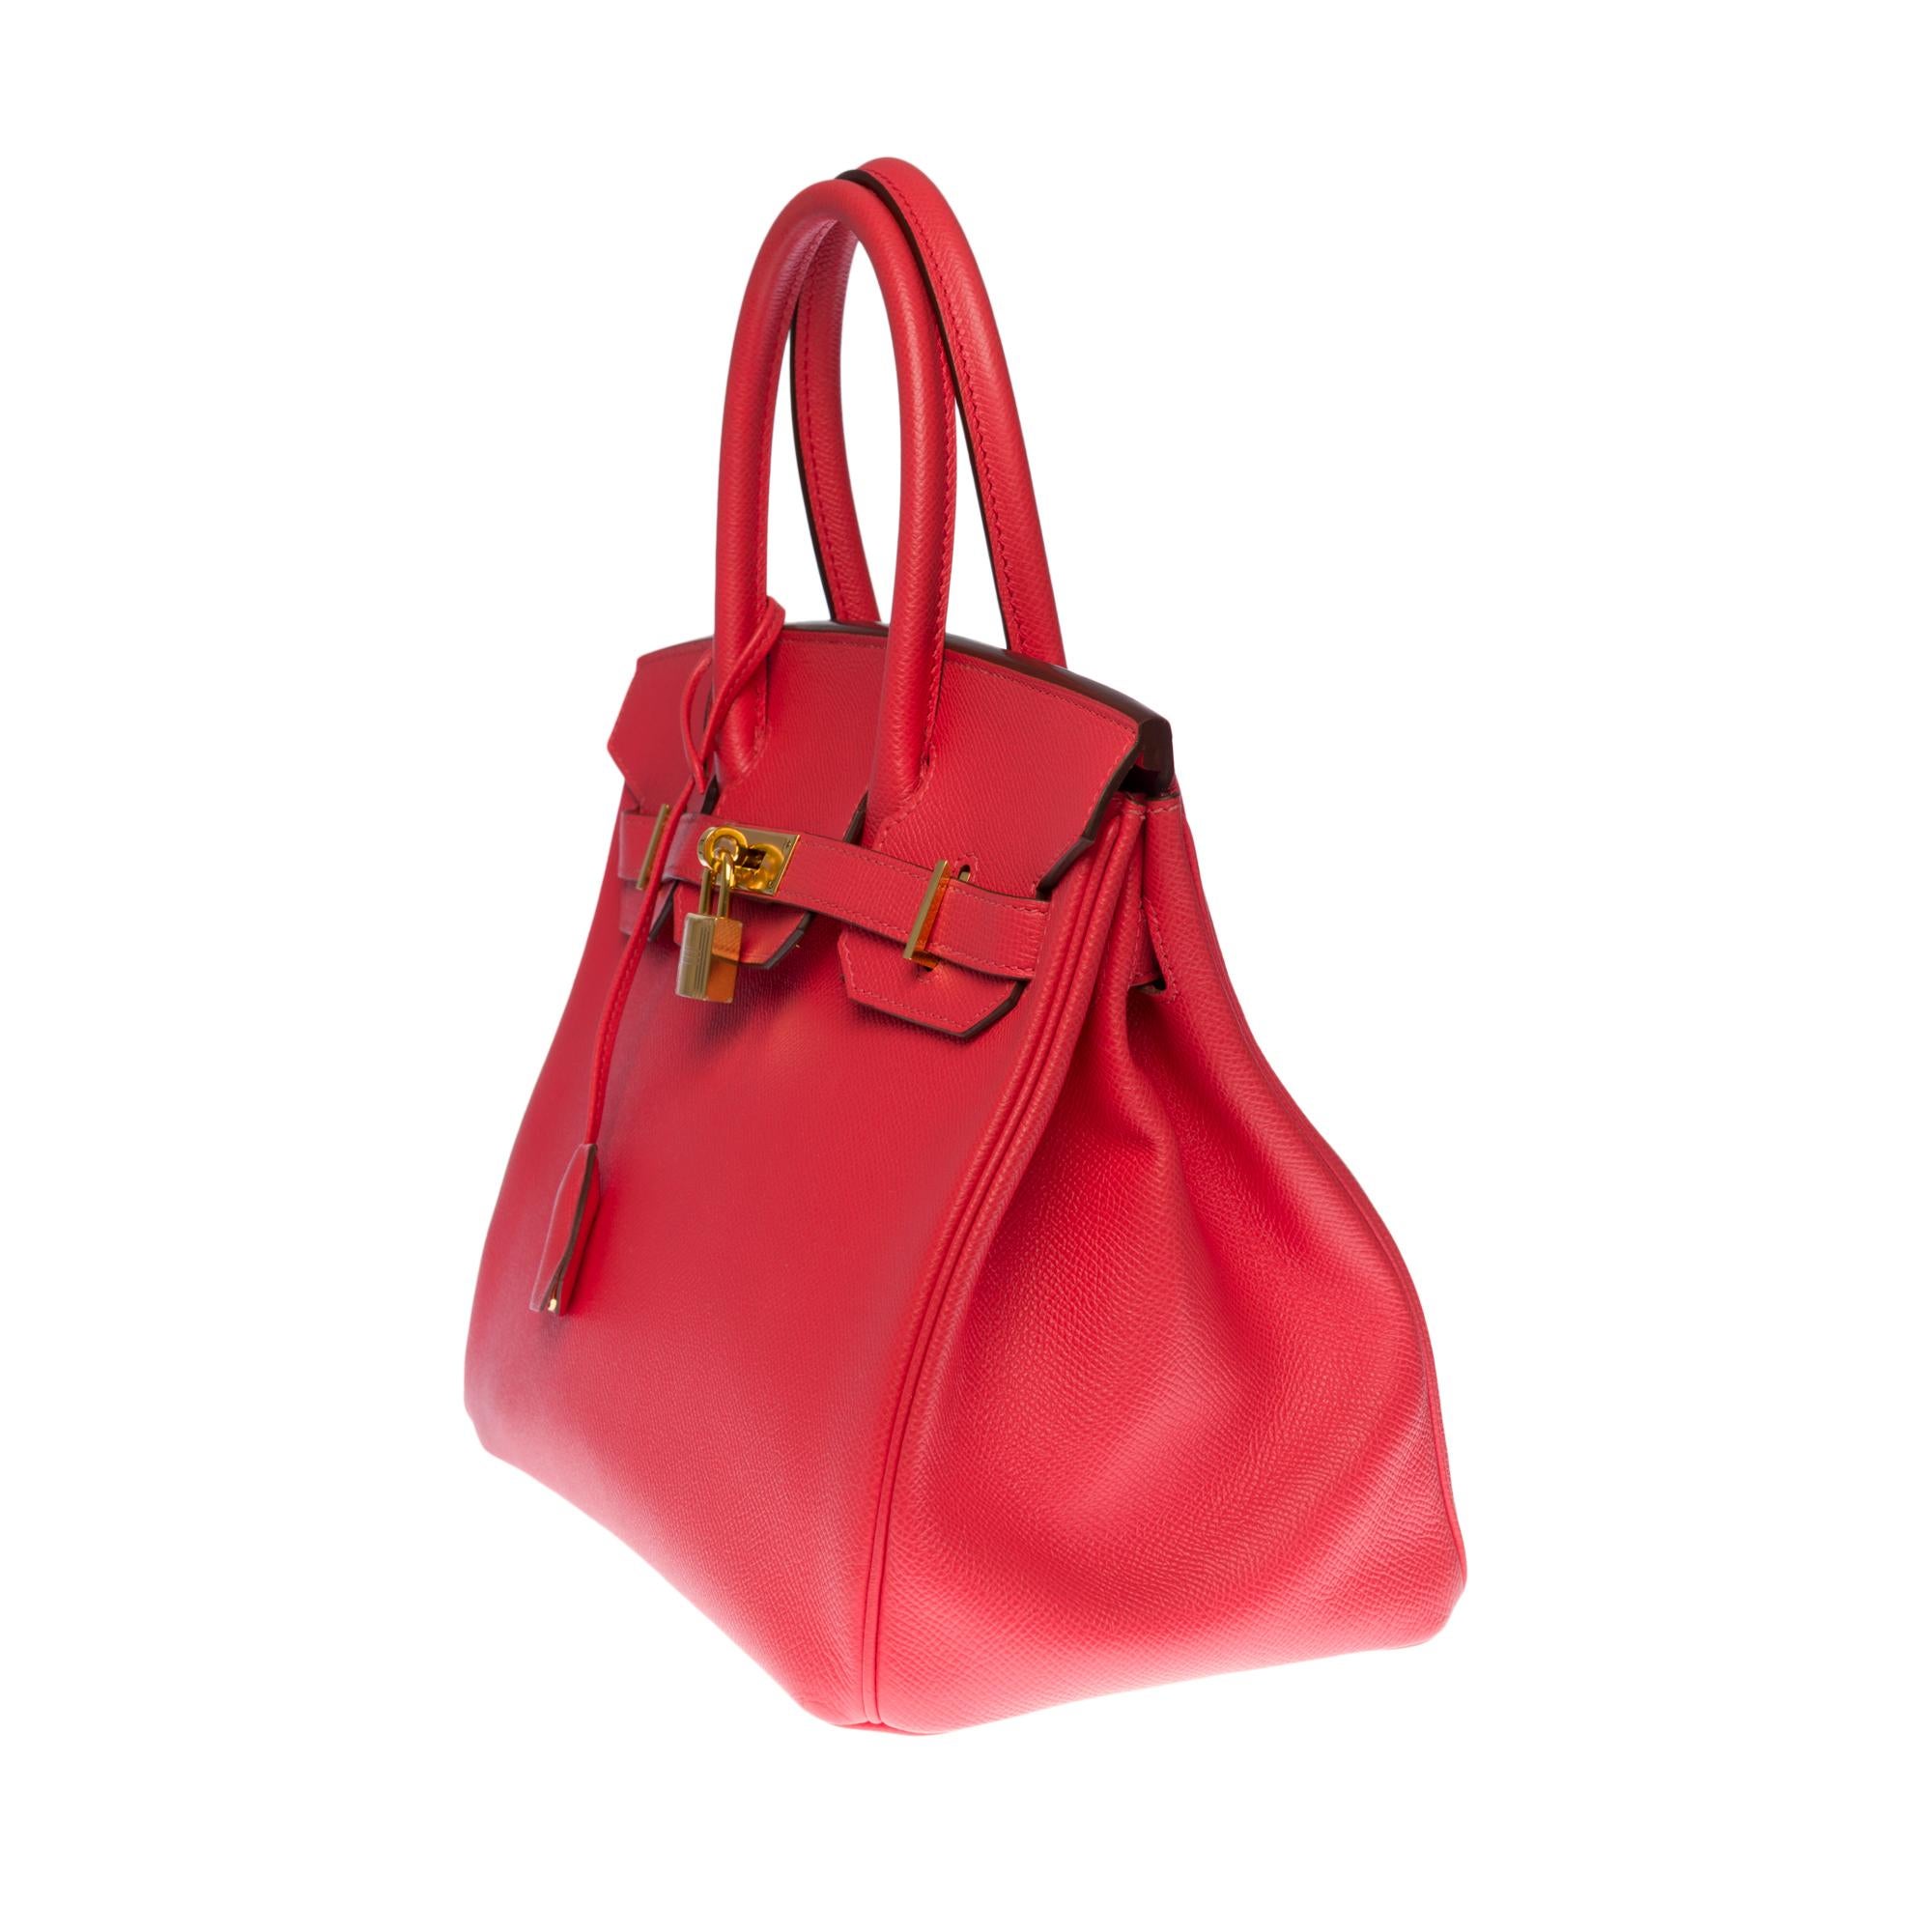 Red Almost New - Hermès Birkin 30 handbag in Rose Jaïpur Epsom leather, GHW